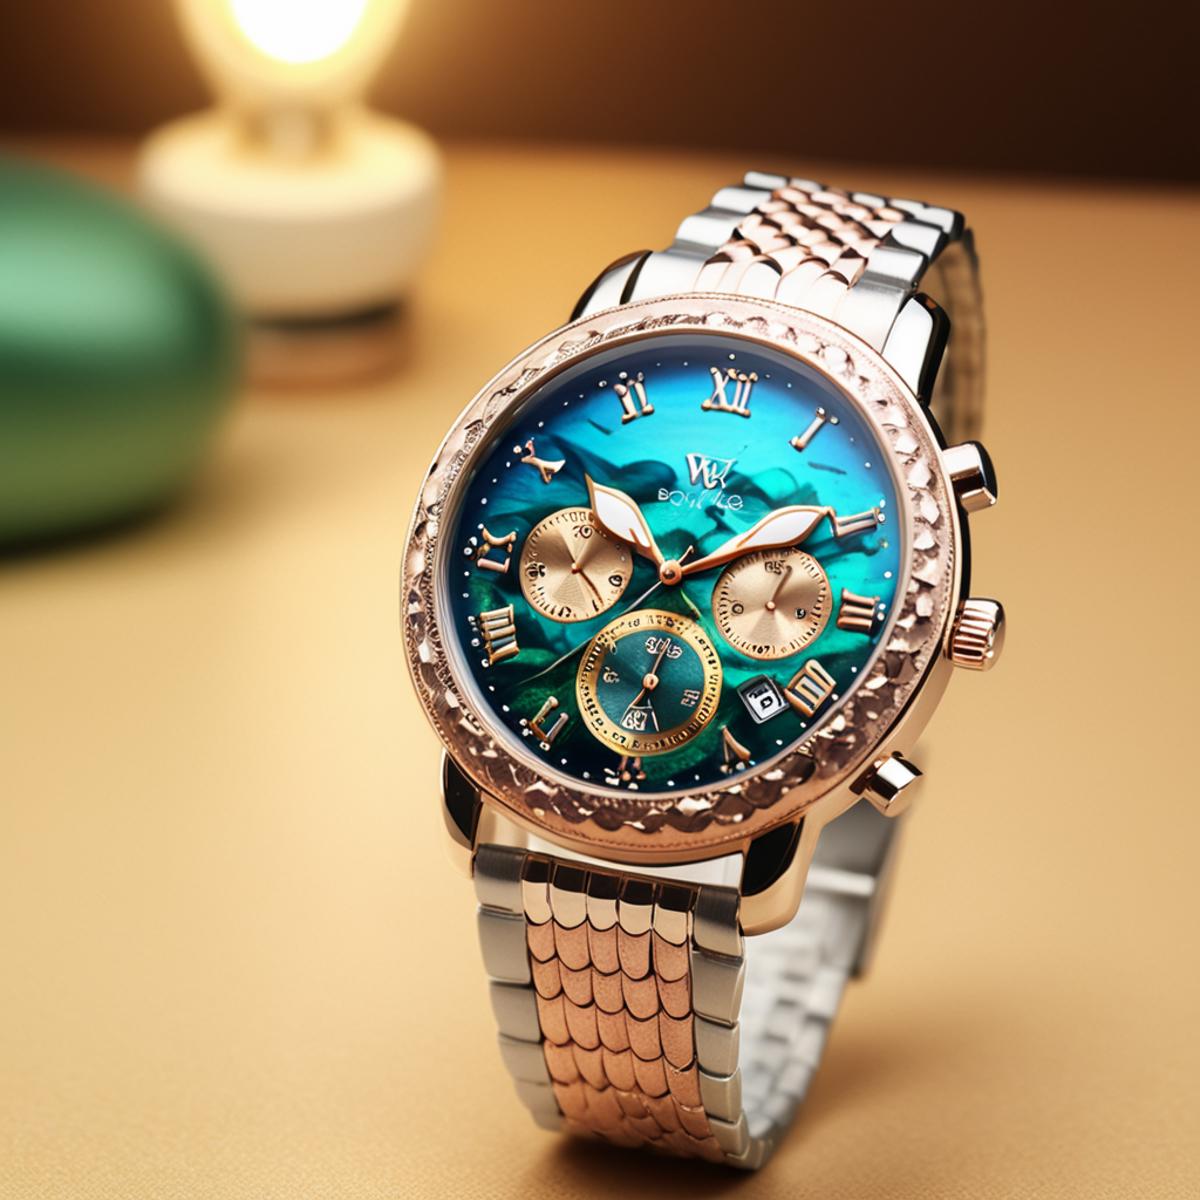 Watches image by Signalytix